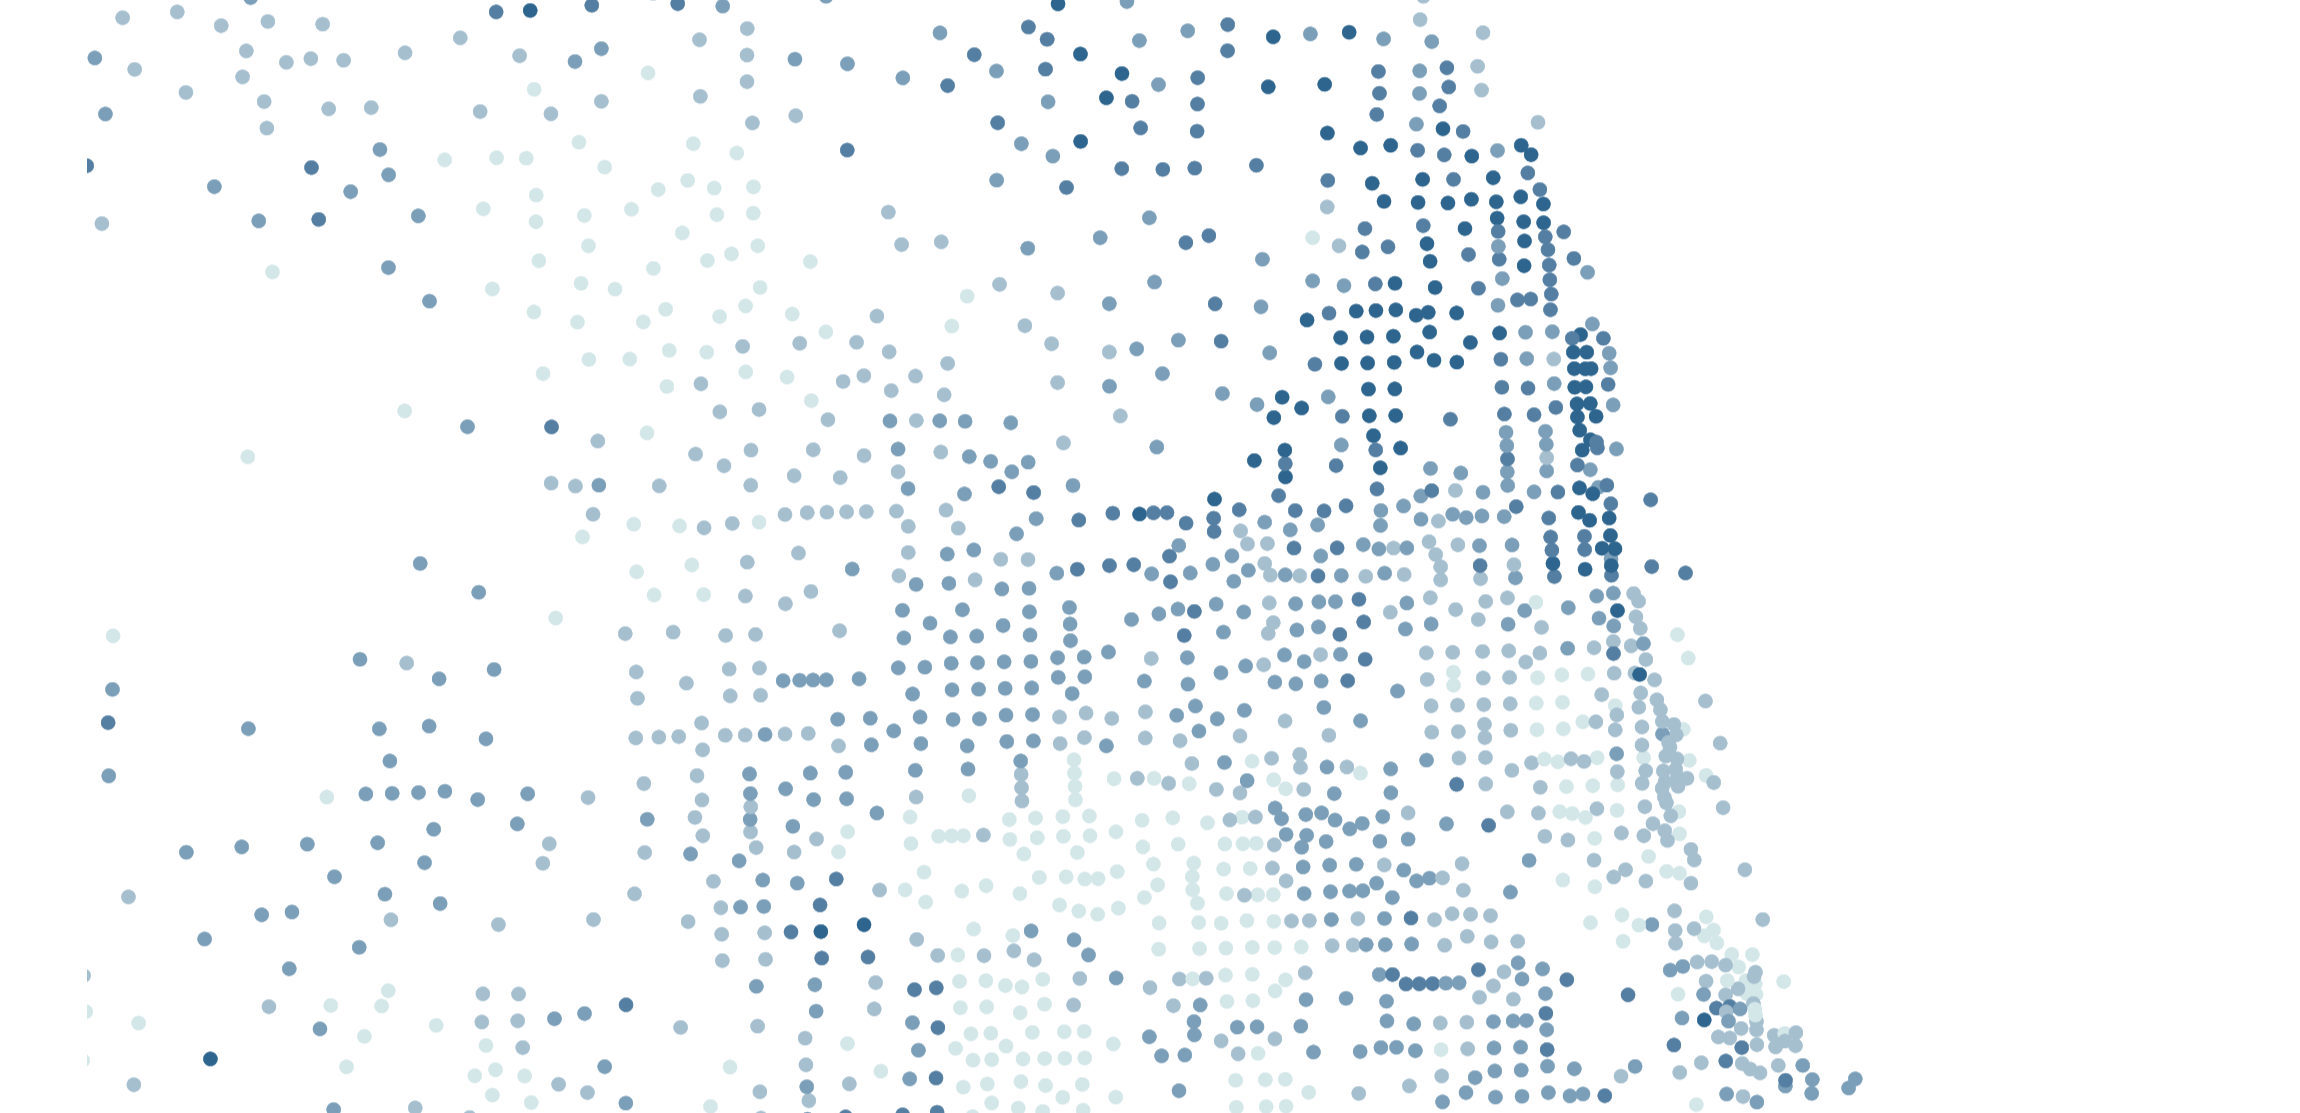 Social diversity index of Chicago.